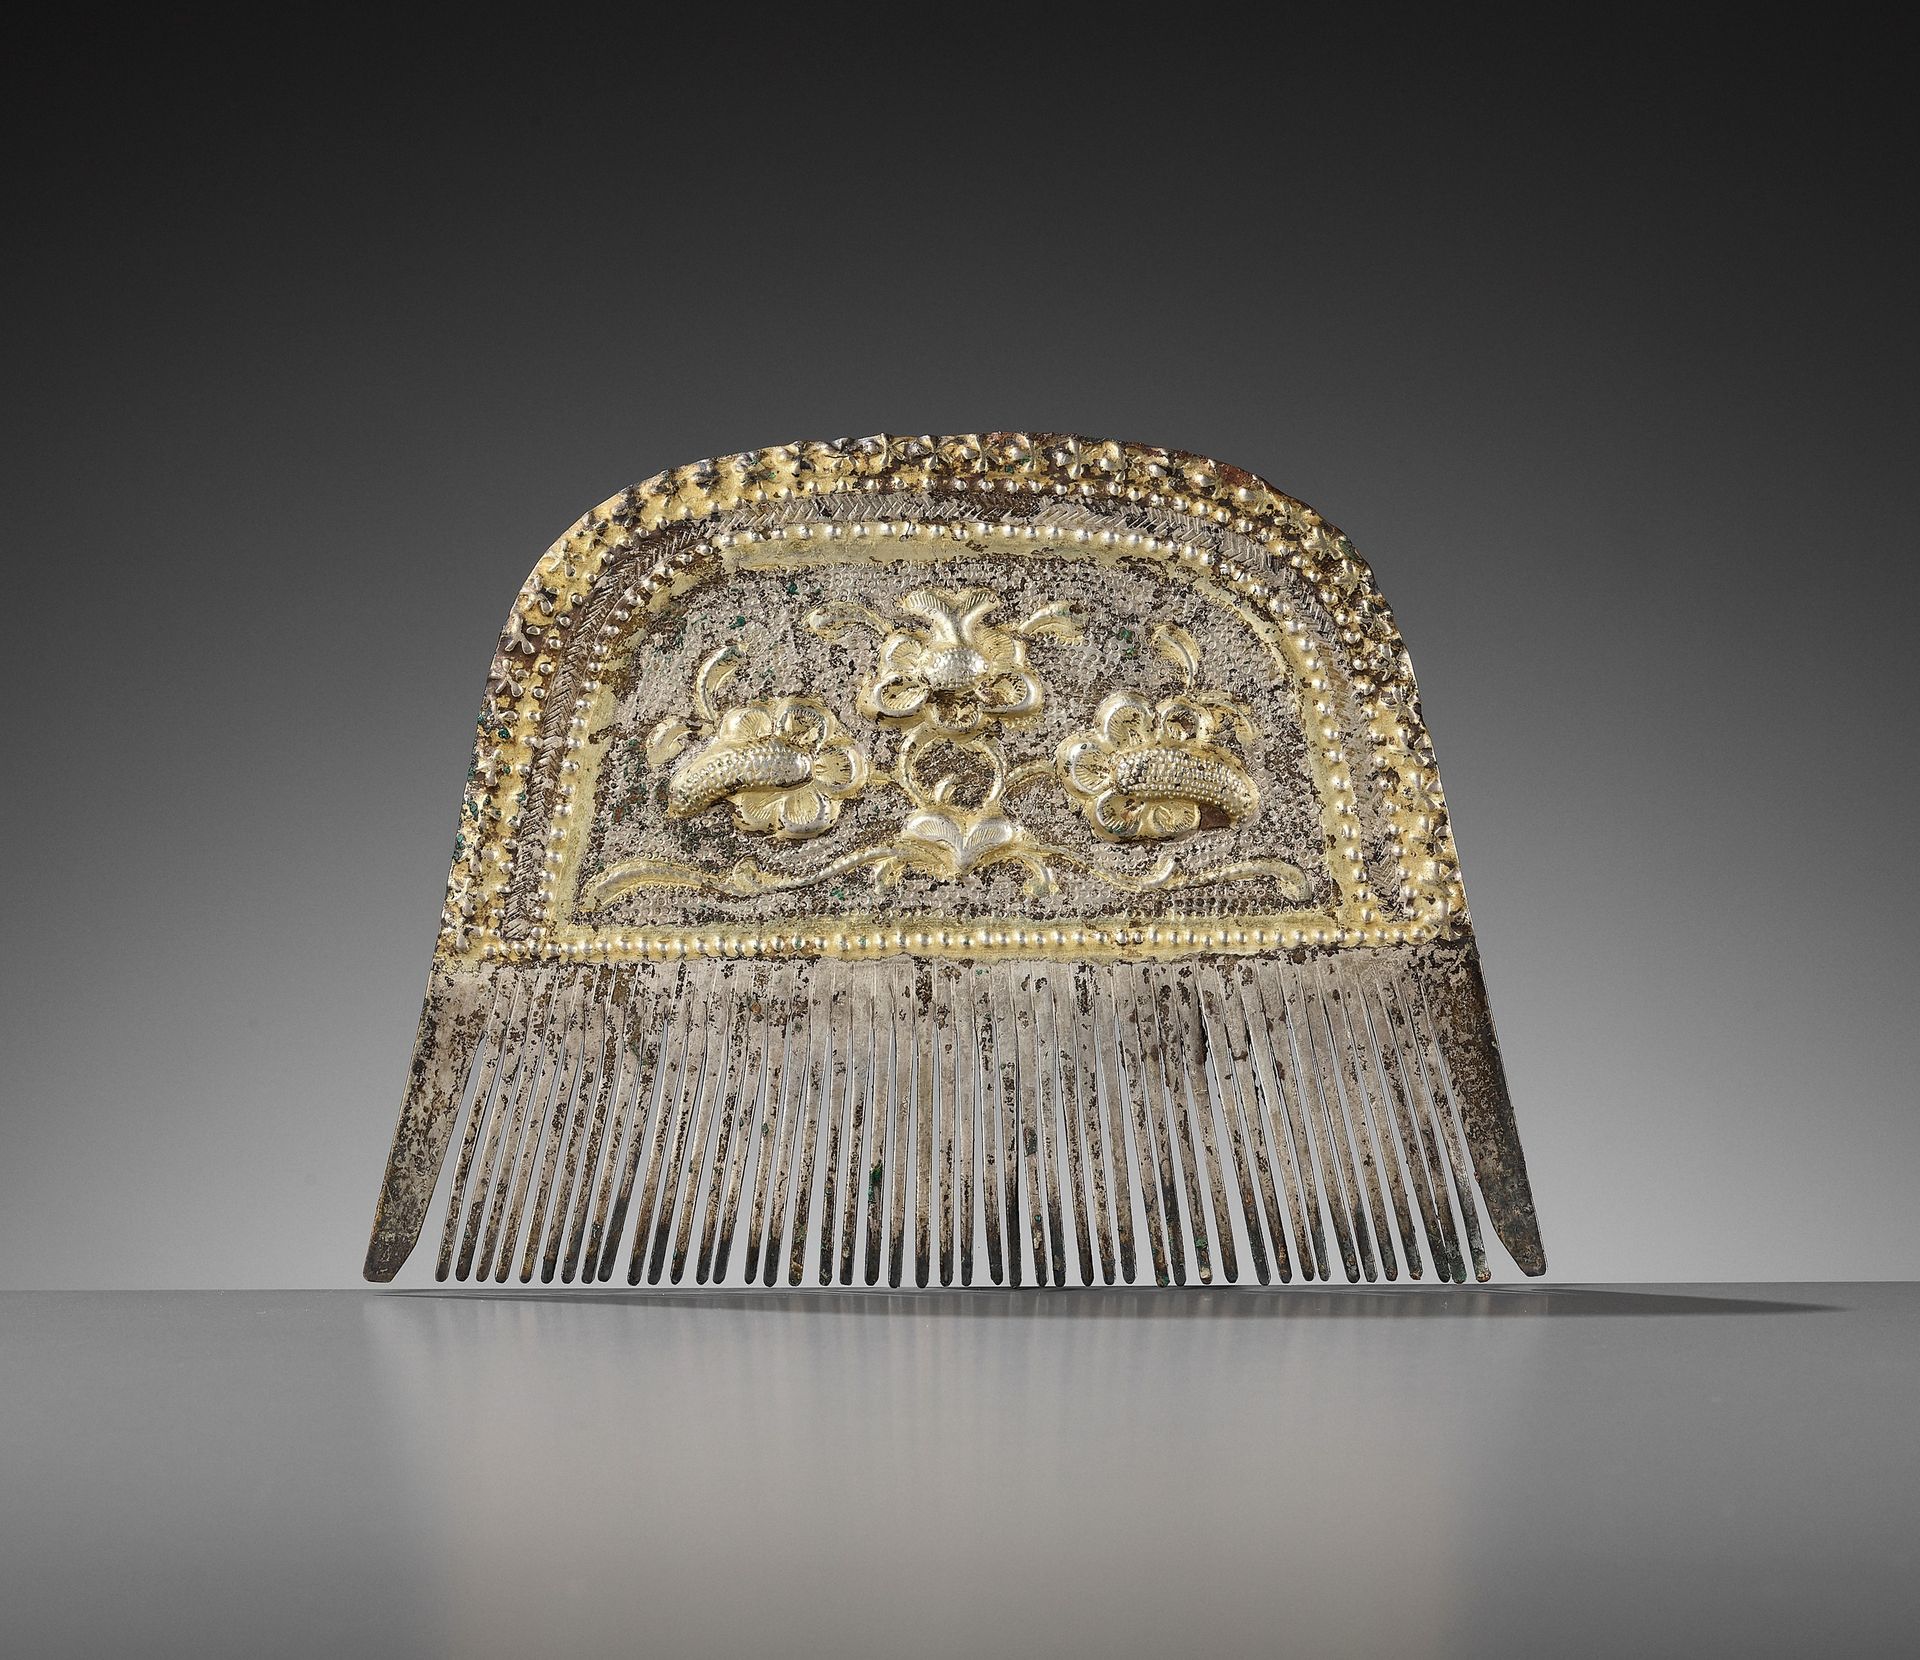 A PARCEL-GILT SILVER COMB, TANG DYNASTY 一把唐代鎏金银梳子
中国，618-907。梳子上部的鎏金部分用回形纹装饰，梅花从&hellip;